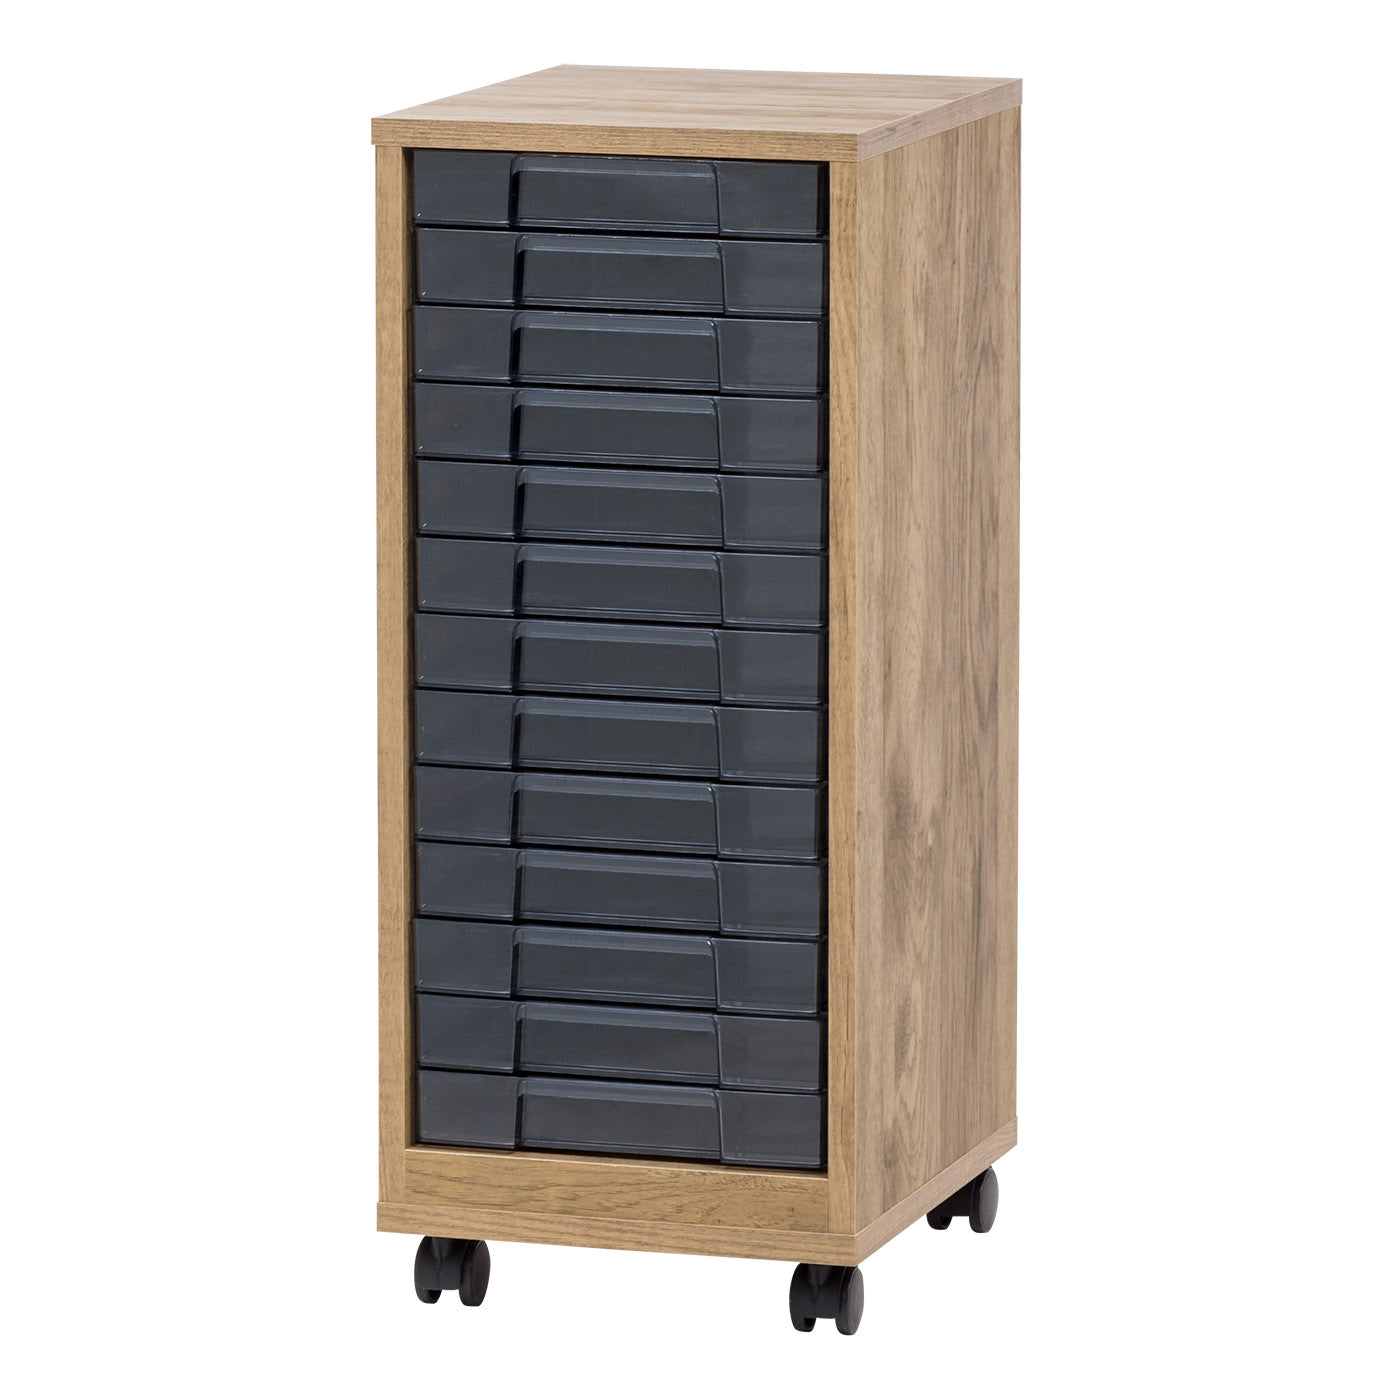 Wooden Floor Case Desk Organizer, Multifunctional Storage, Office Supply Drawers Cart